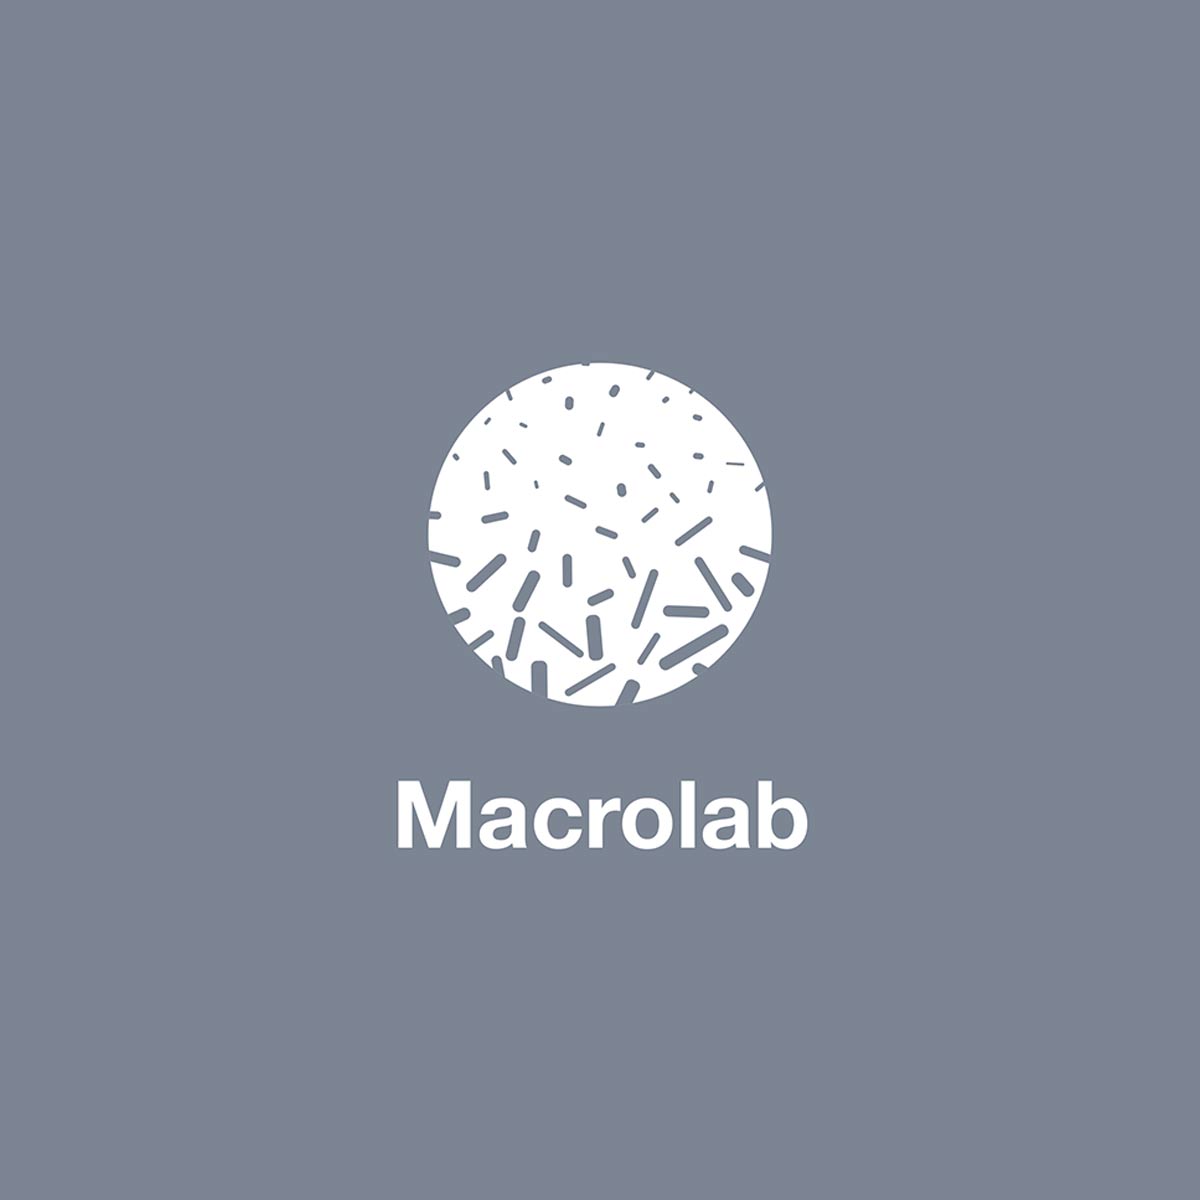 macrolab logo